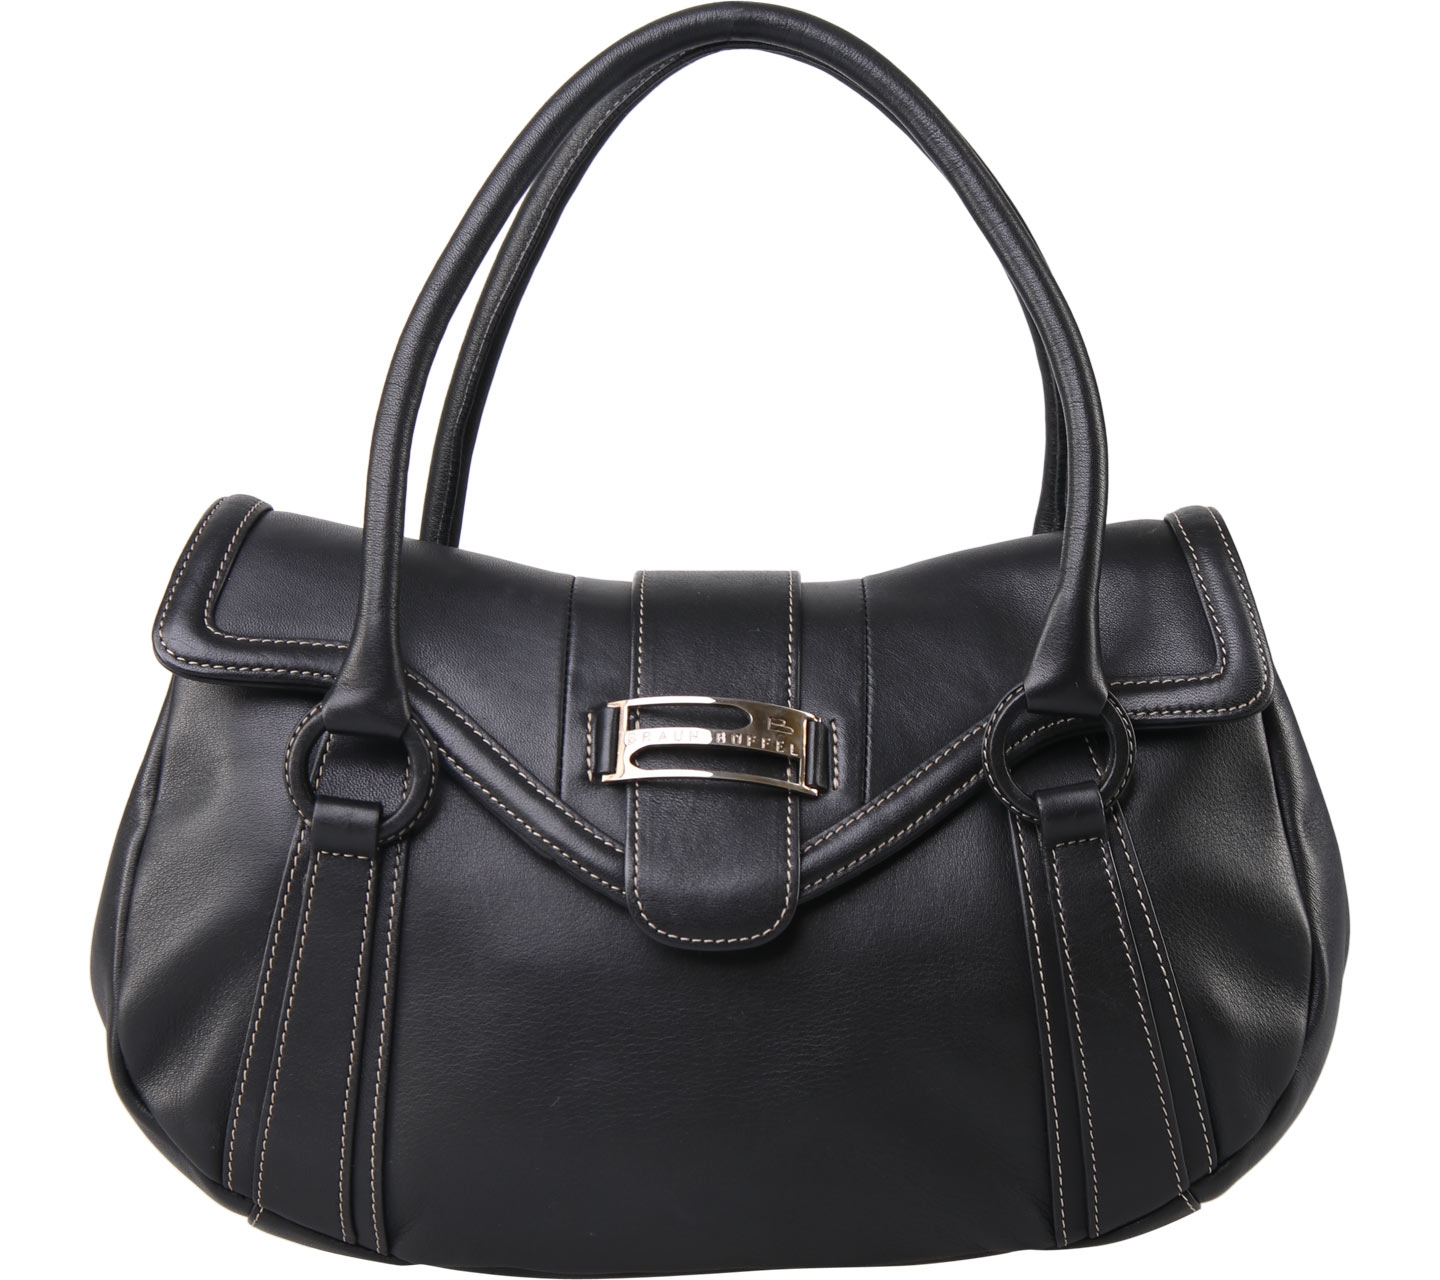 Braun Buffle Black Handbag